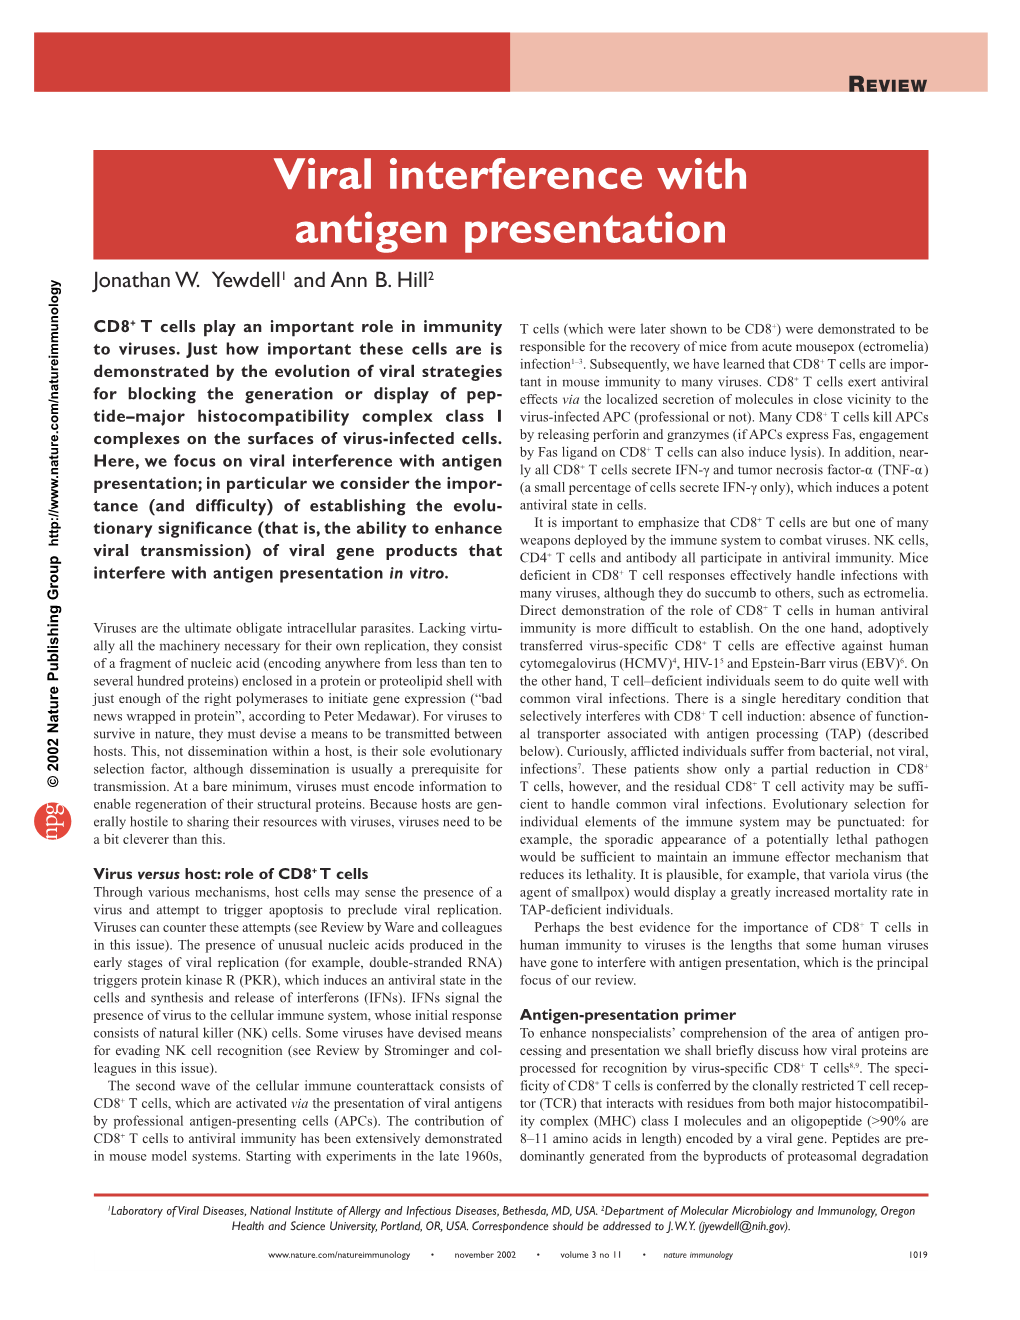 Viral Interference with Antigen Presentation Jonathan W